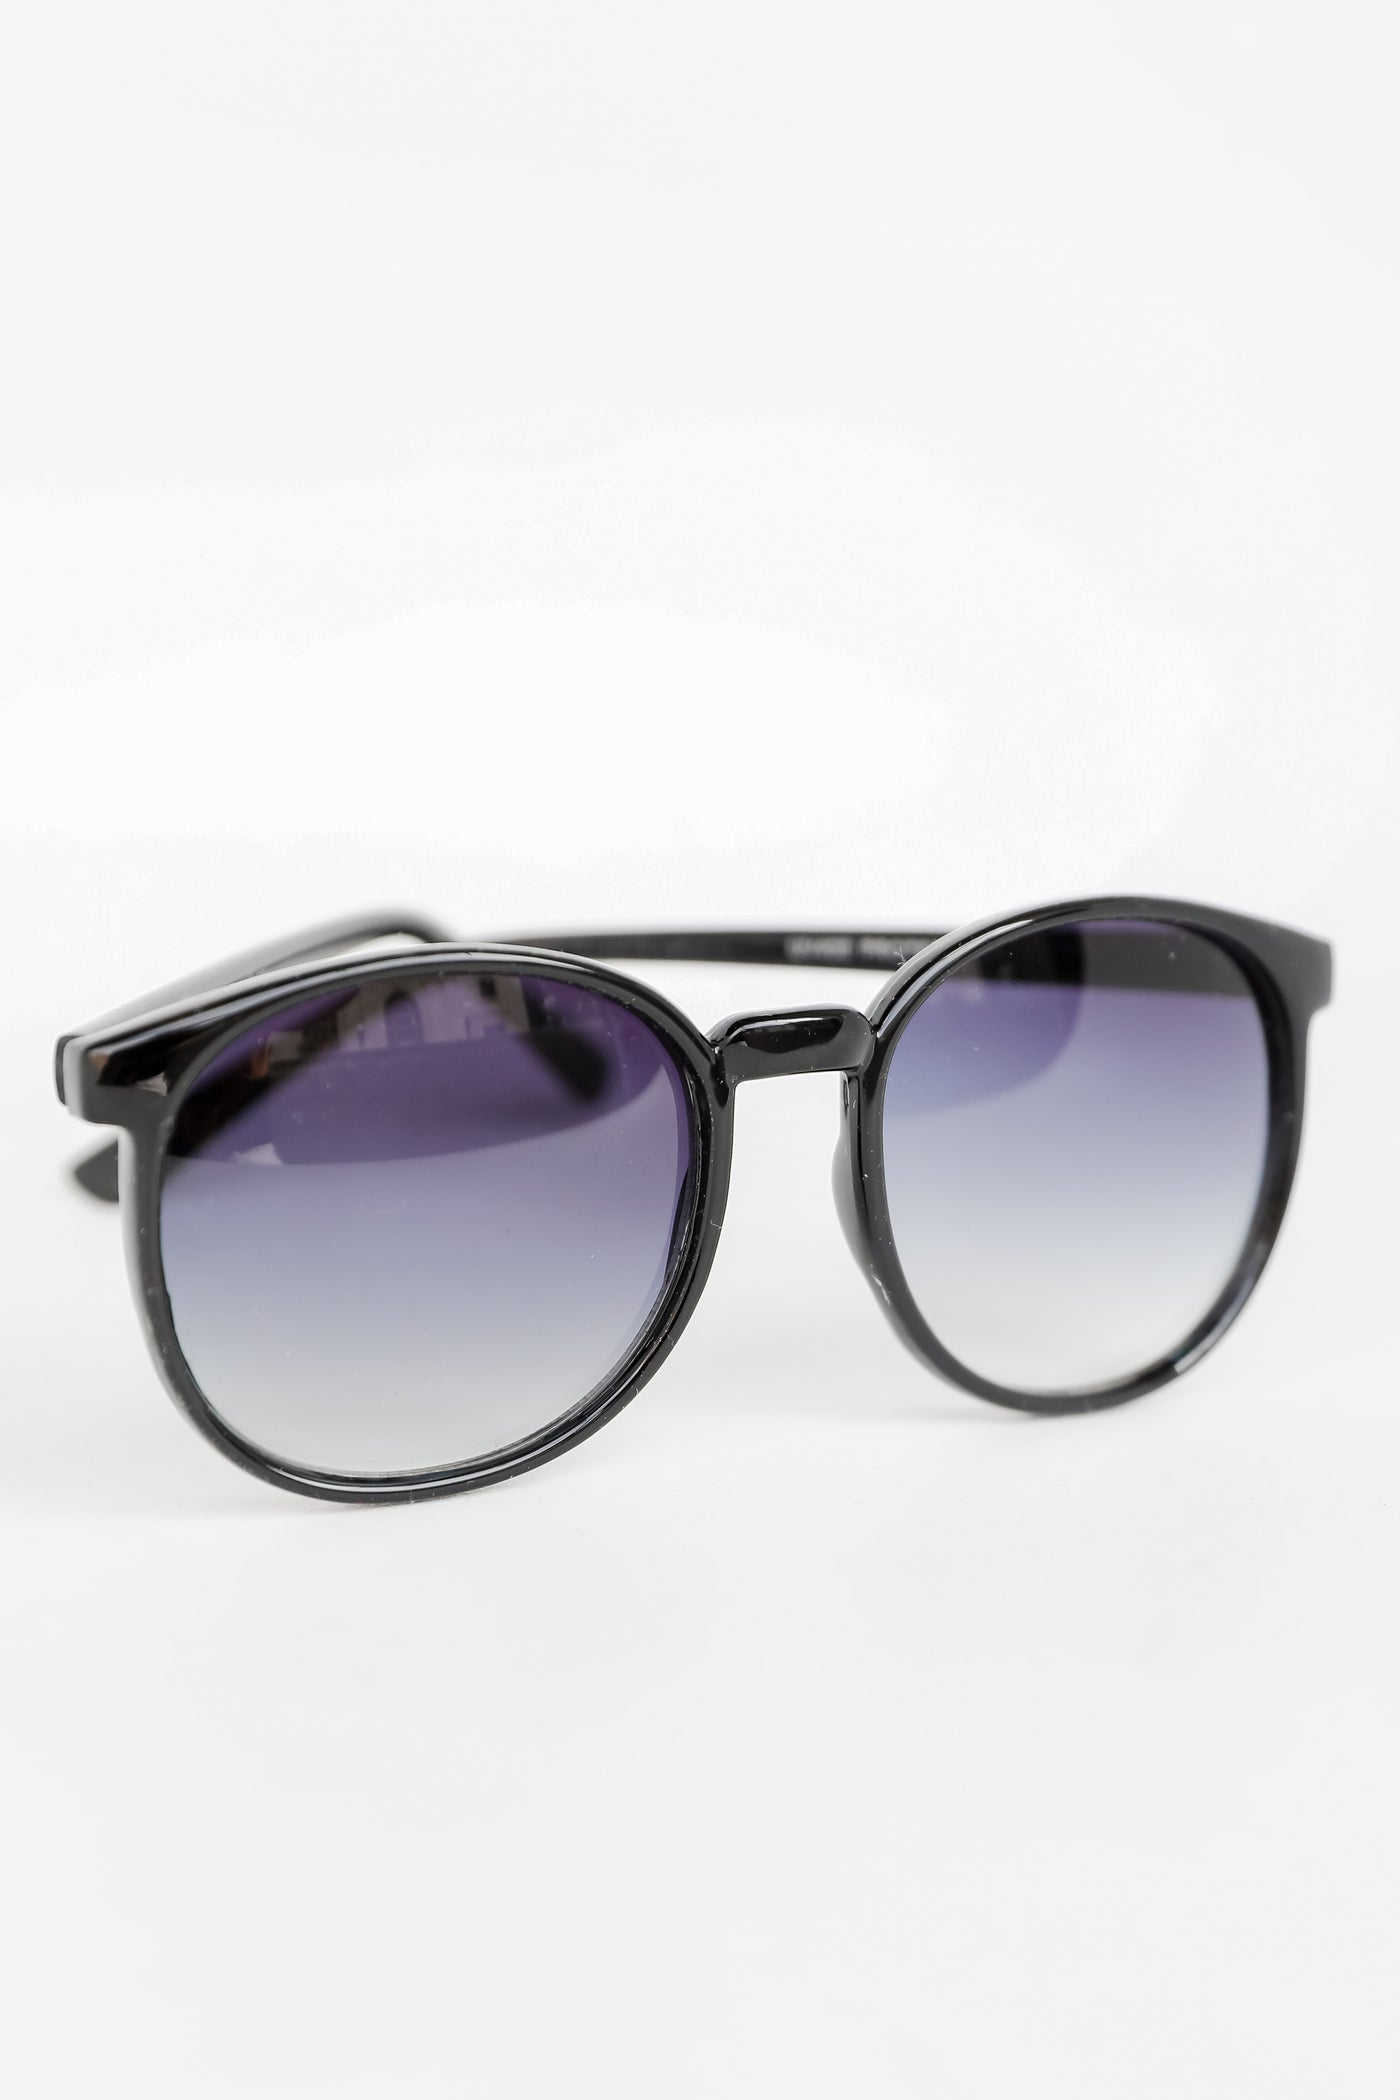 Round Sunglasses in black close up